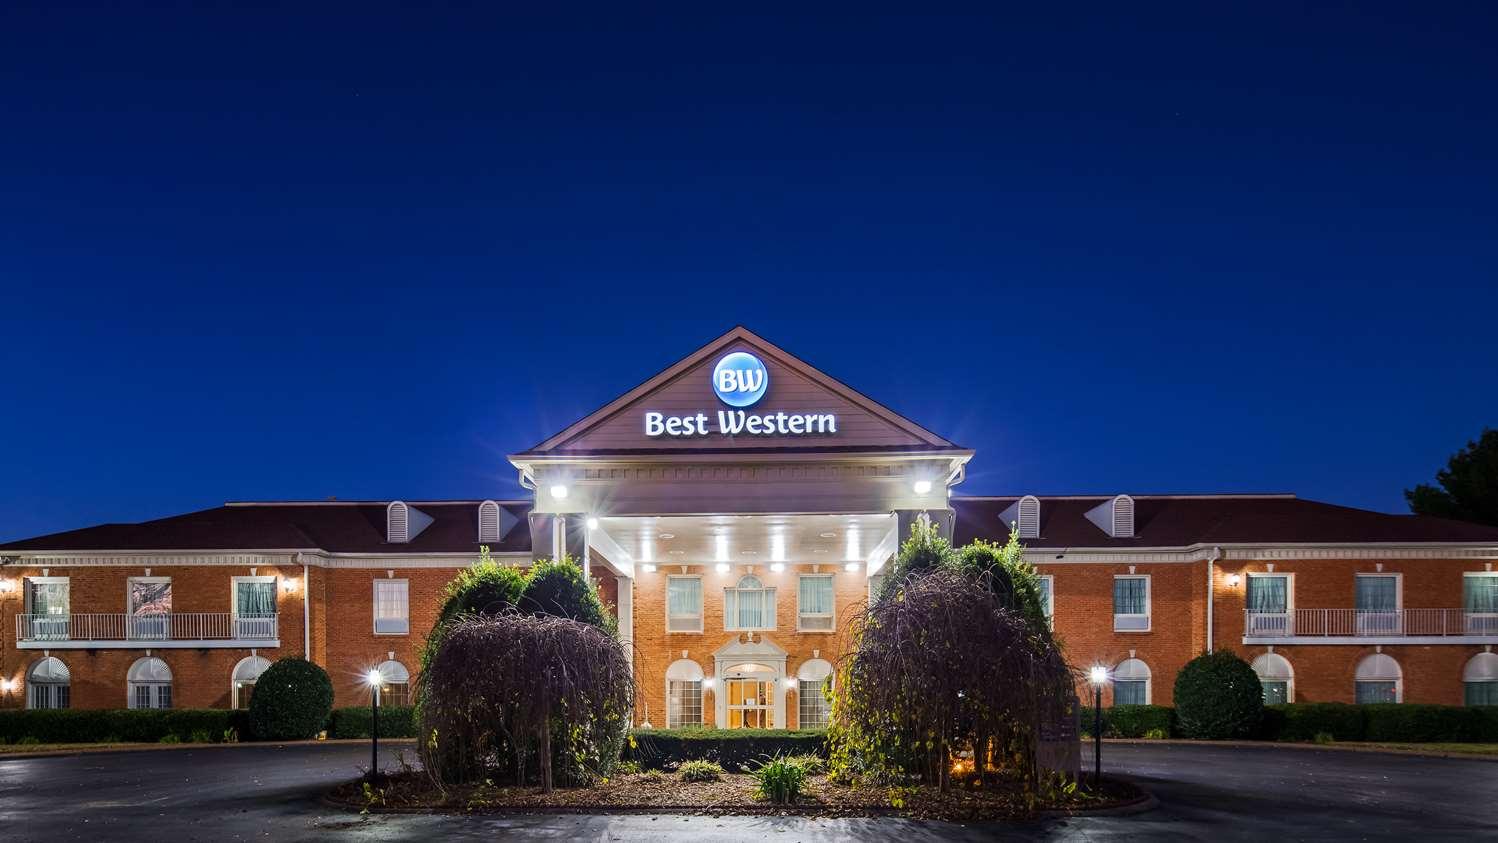 Best Western Spring Hill Inn & Suites in Spring Hill, TN